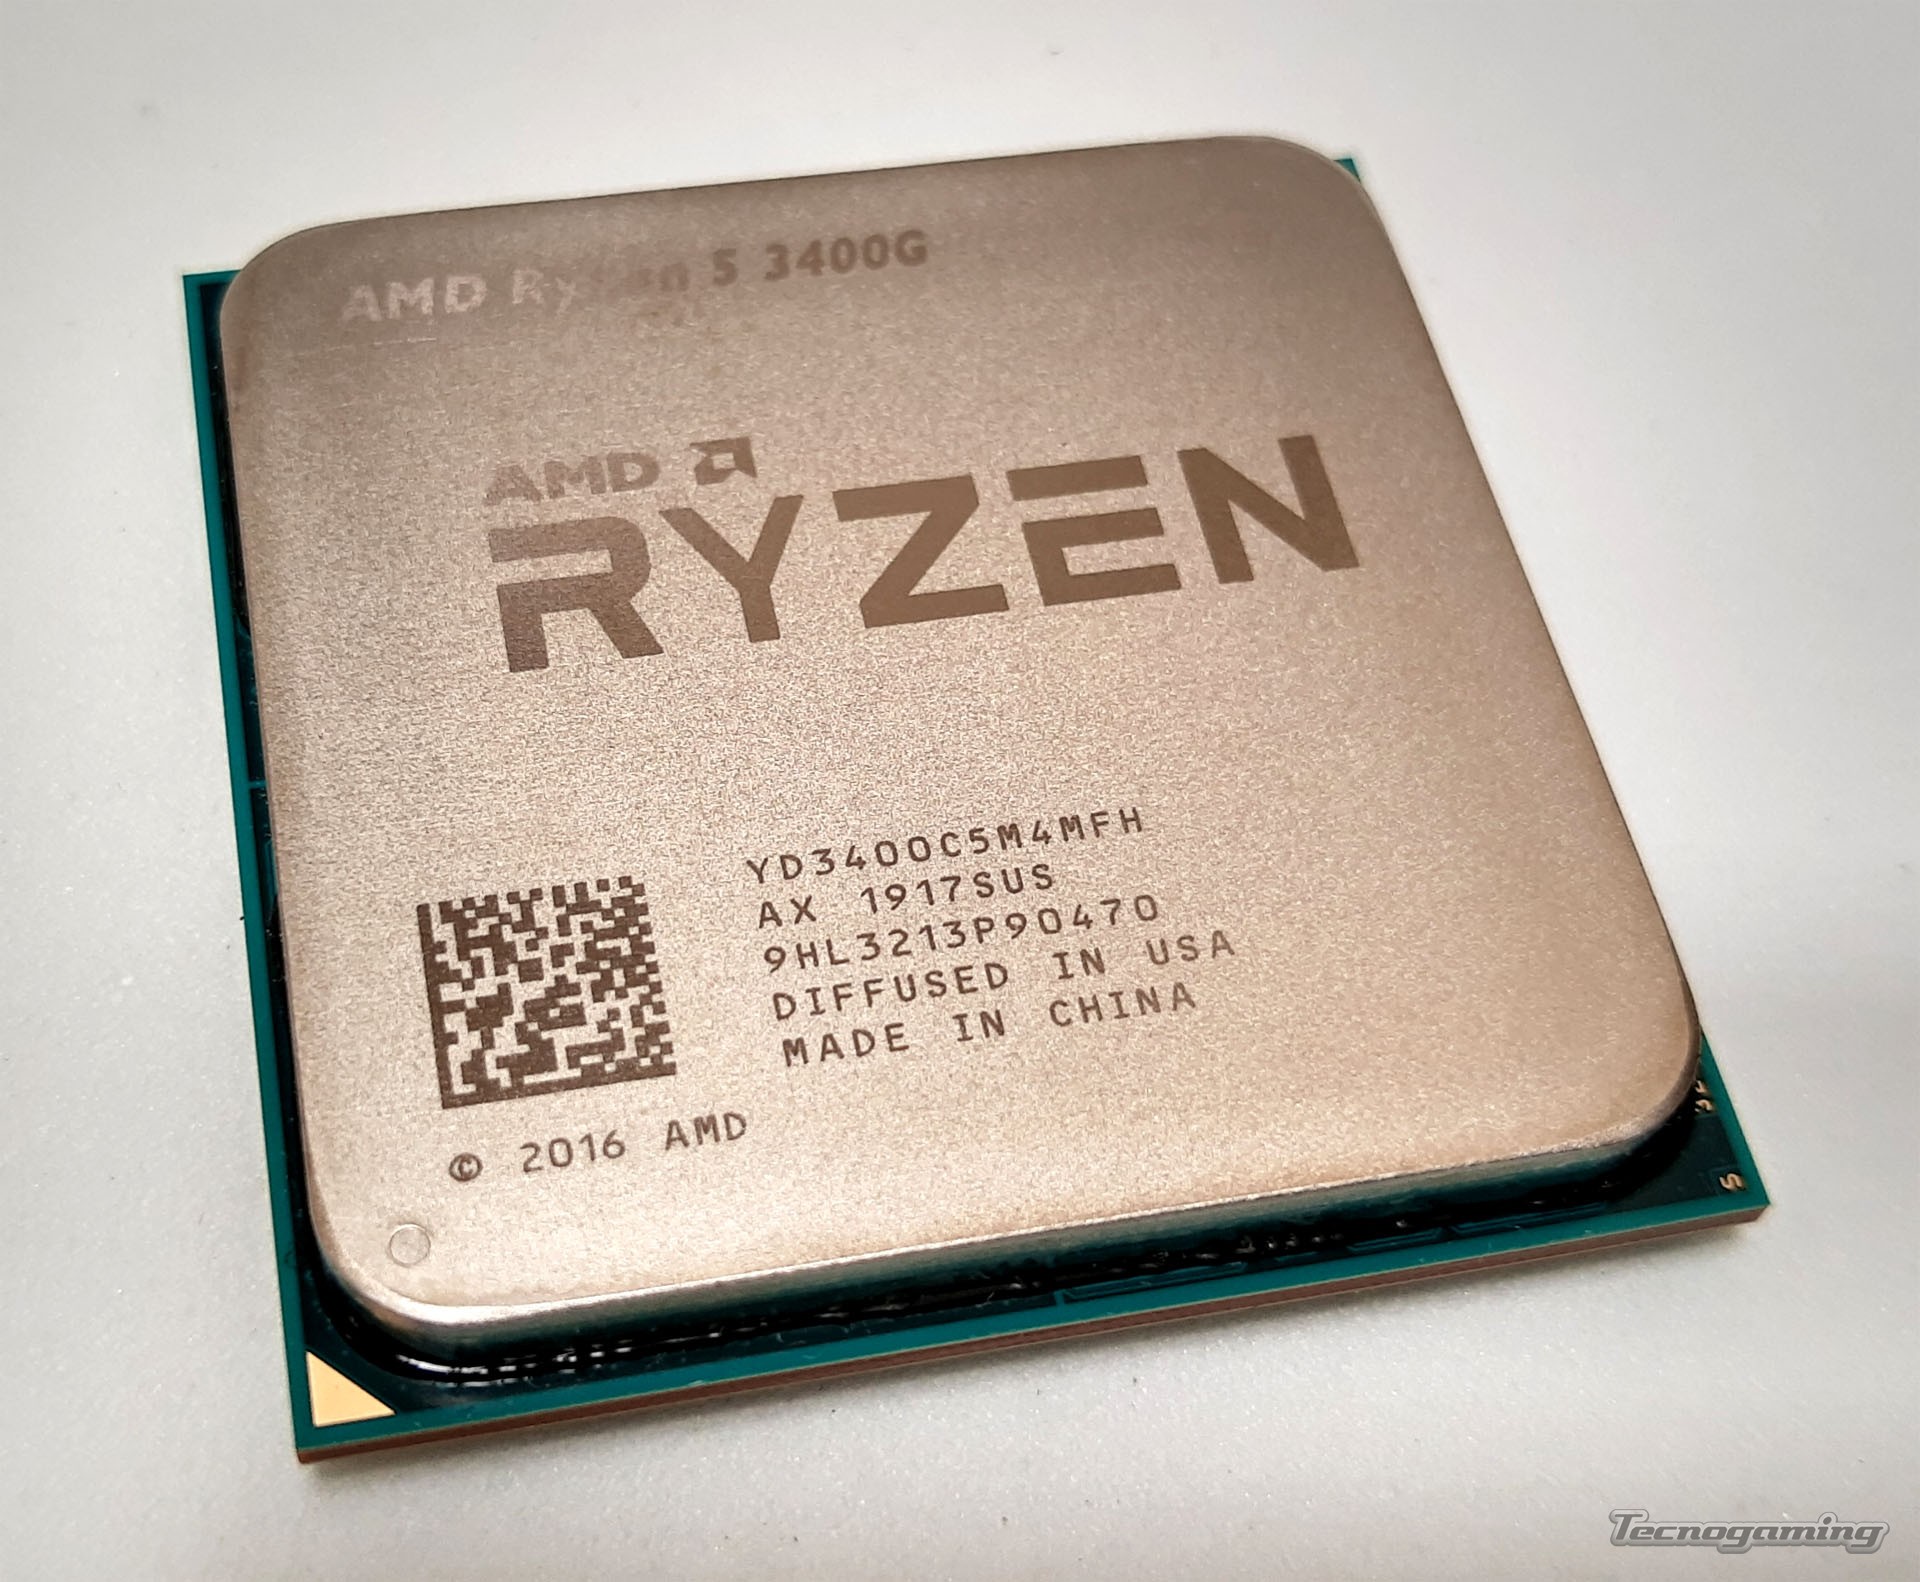 Amd ryzen 5 3400g am4. Ryzen 5 3400g. AMD Ryzen 5 3400g with Radeon Vega Graphics. 3400g Ryzen фото. Ryzen 3400g мыльная картинка.